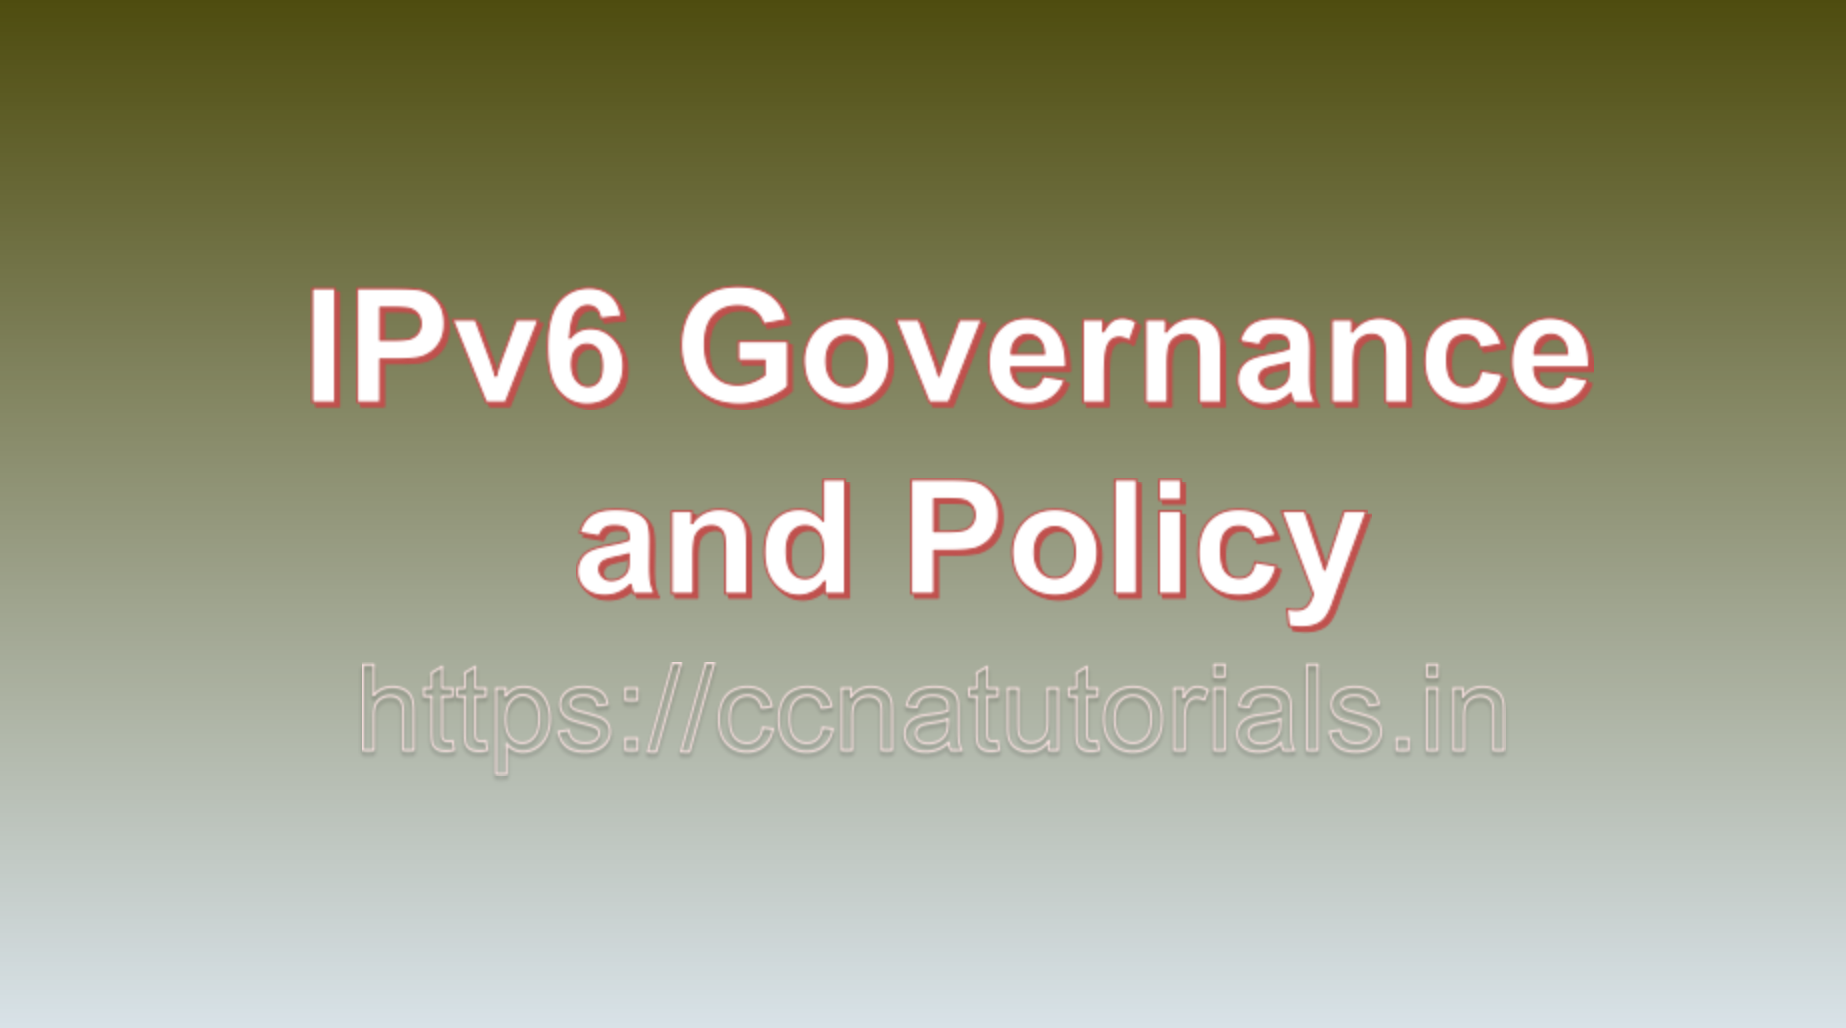 IPv6 Governance and Policy, ccna, CCNA TUTORIALS